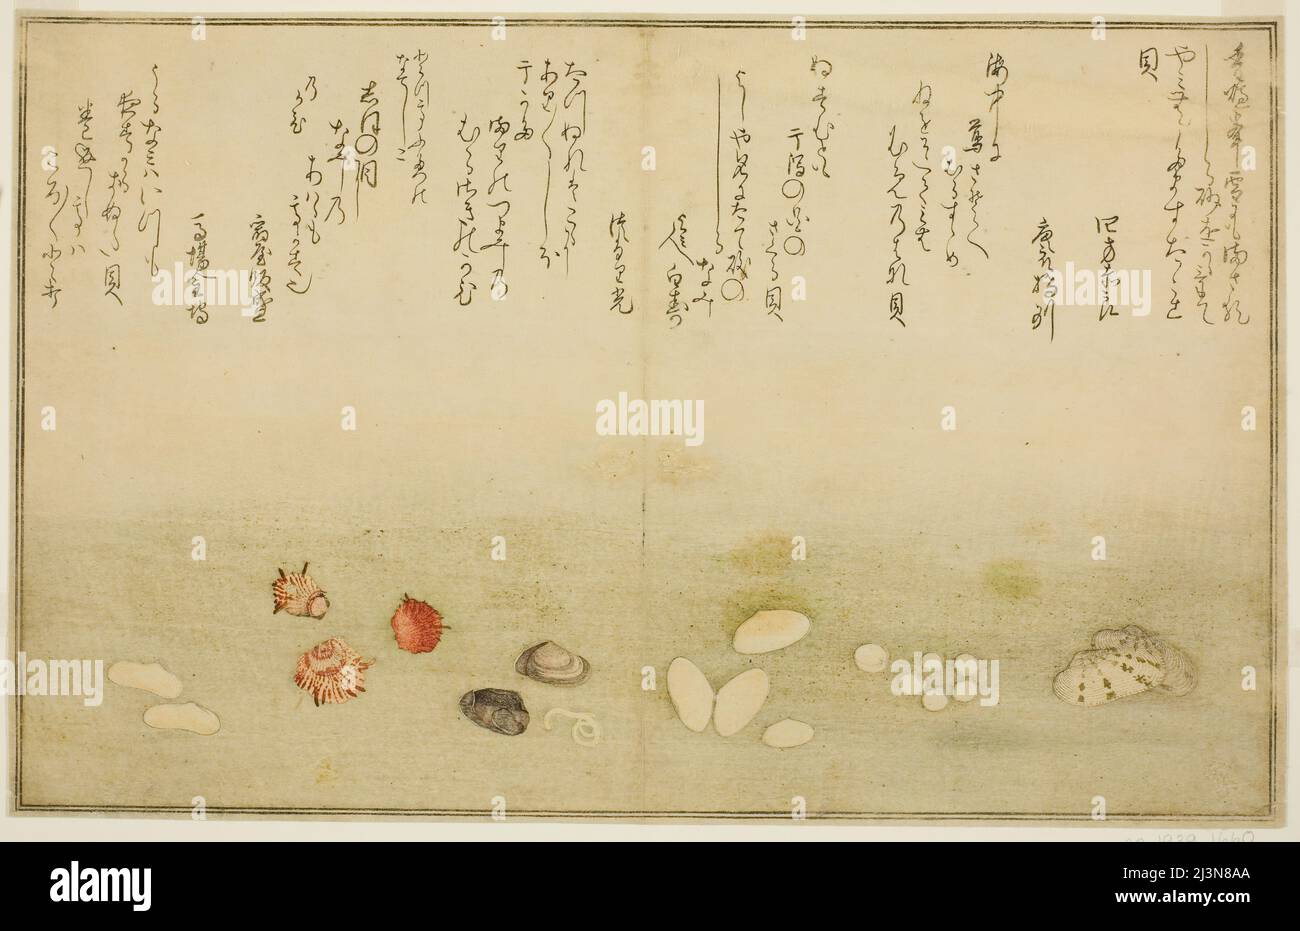 Sudare-gai, hana-gai, sakura-gai, mumeno-gai, nadeshiko-gai, and kinuta-gai, from the illustrated book &quot;Gifts from the Ebb Tide (Shiohi no tsuto)&quot;, Japan, 1789. Stock Photo